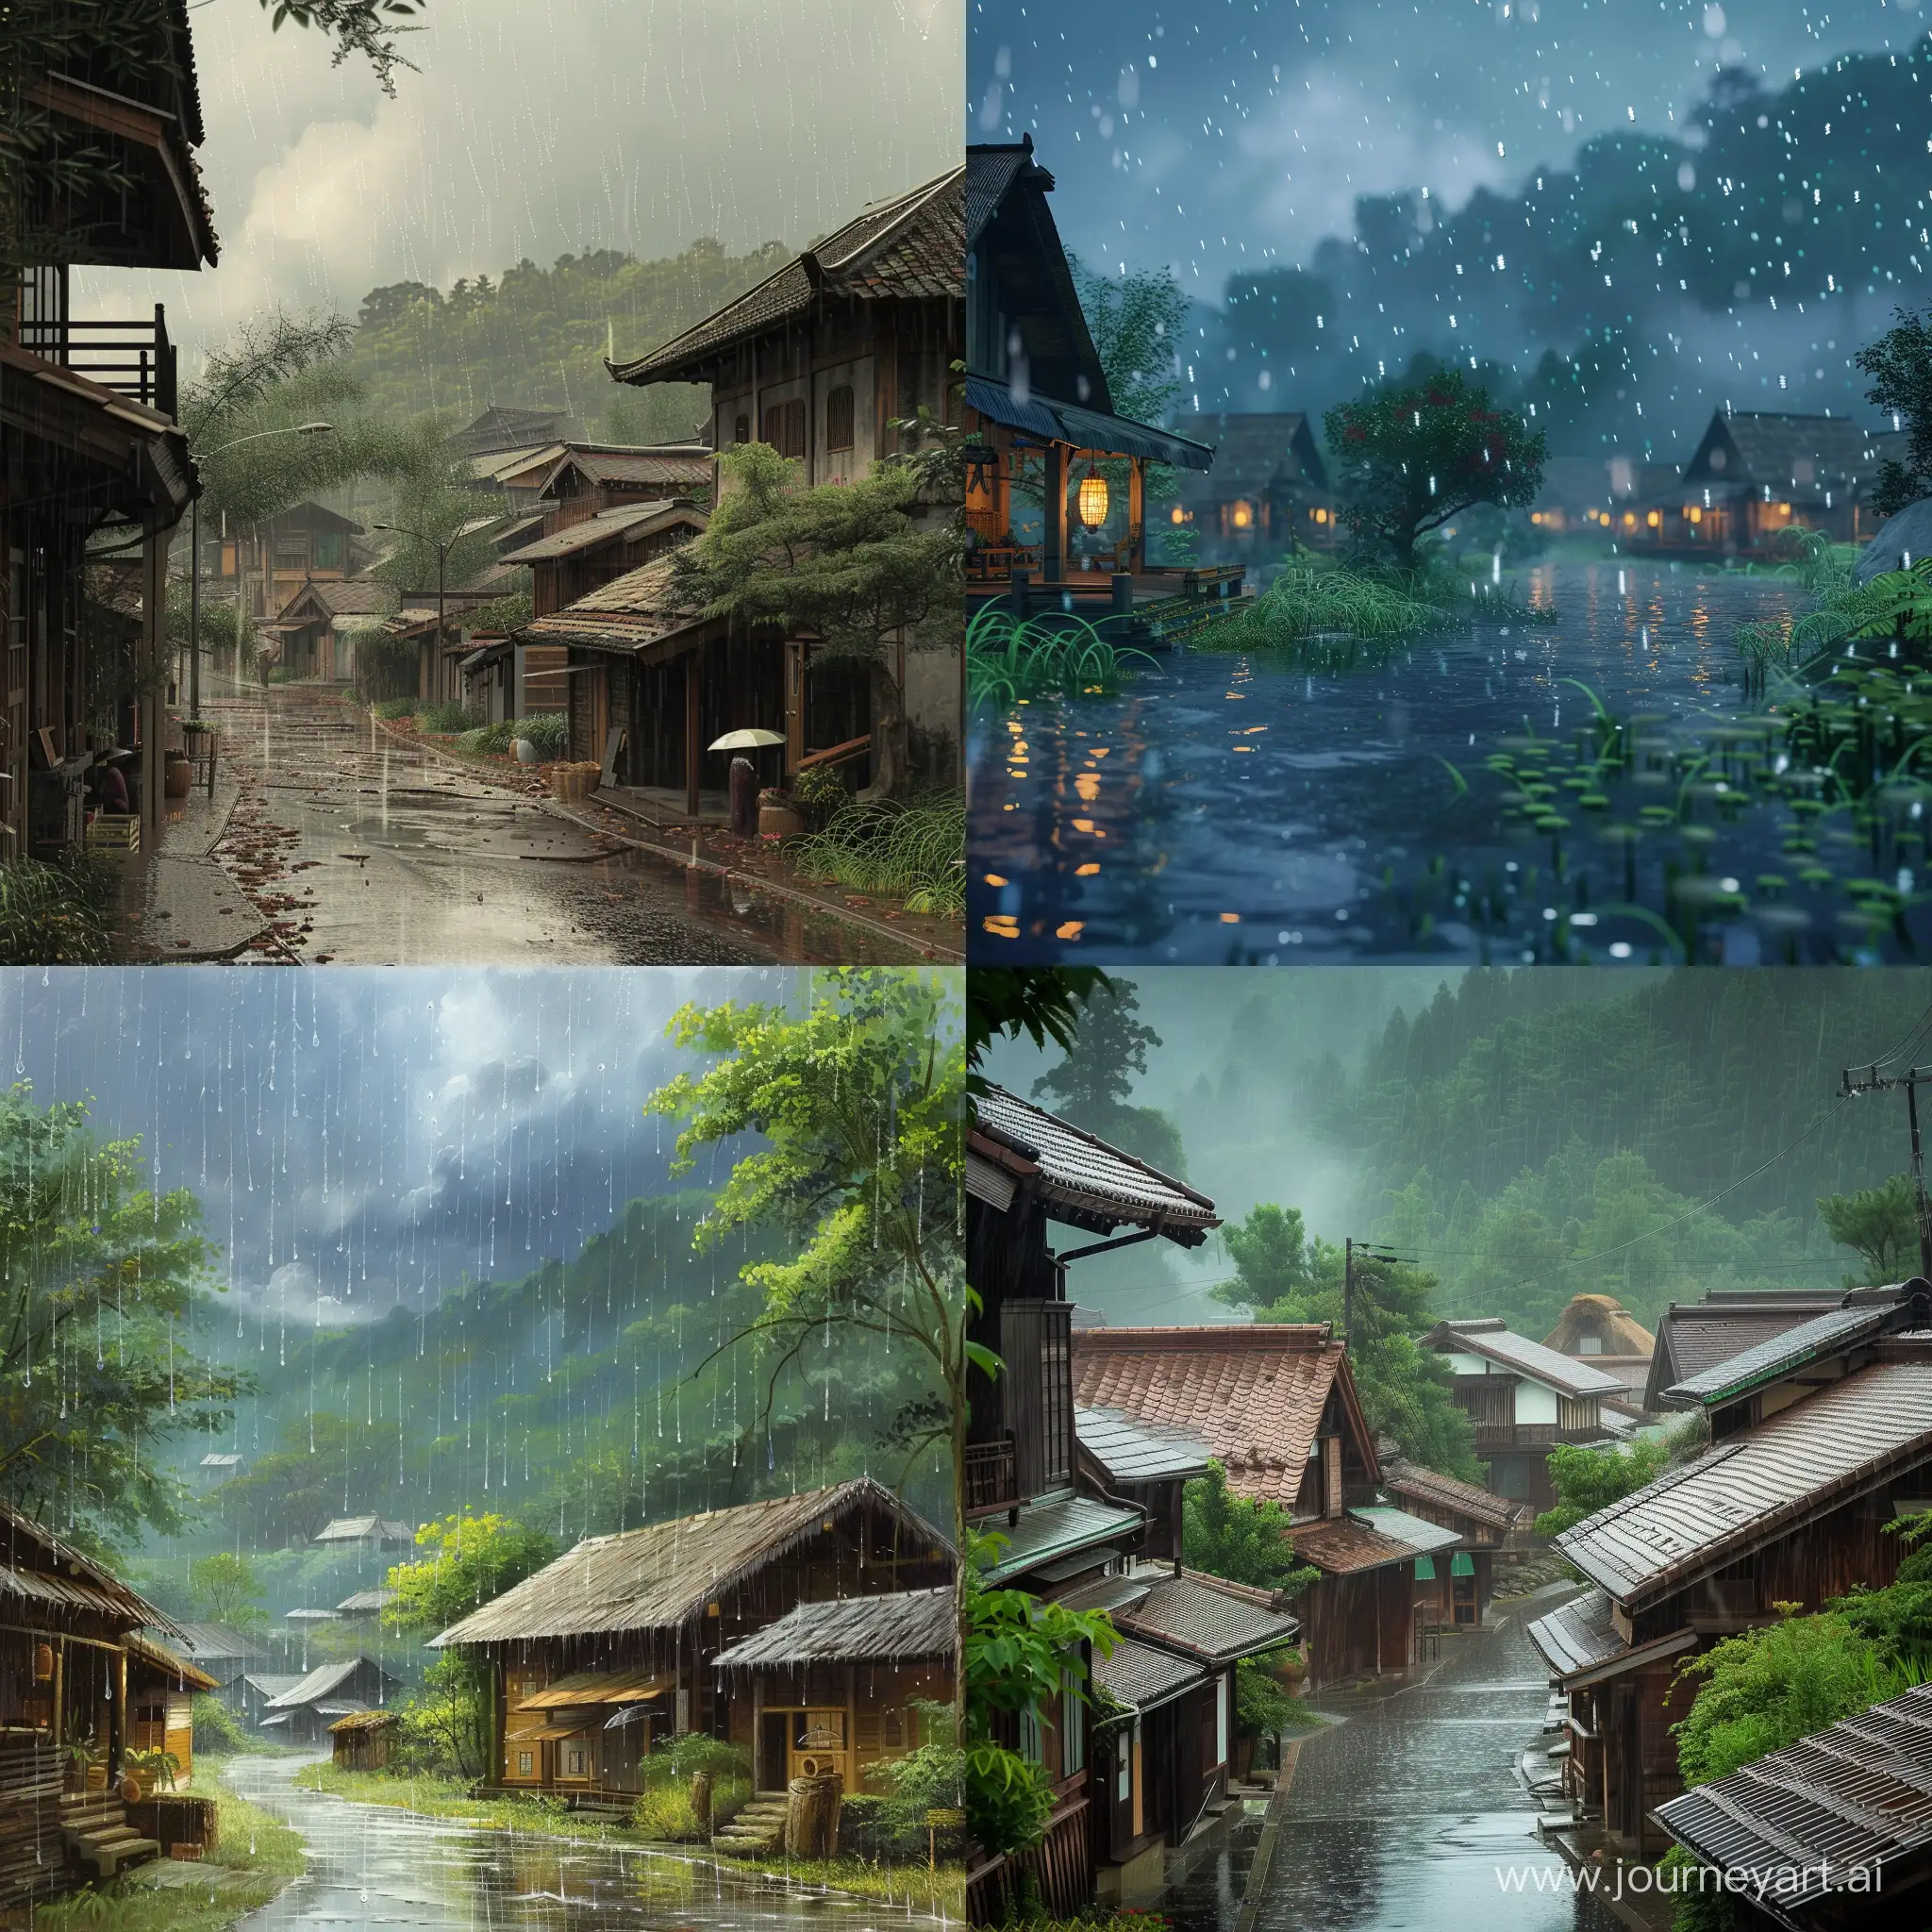 Raining at that village